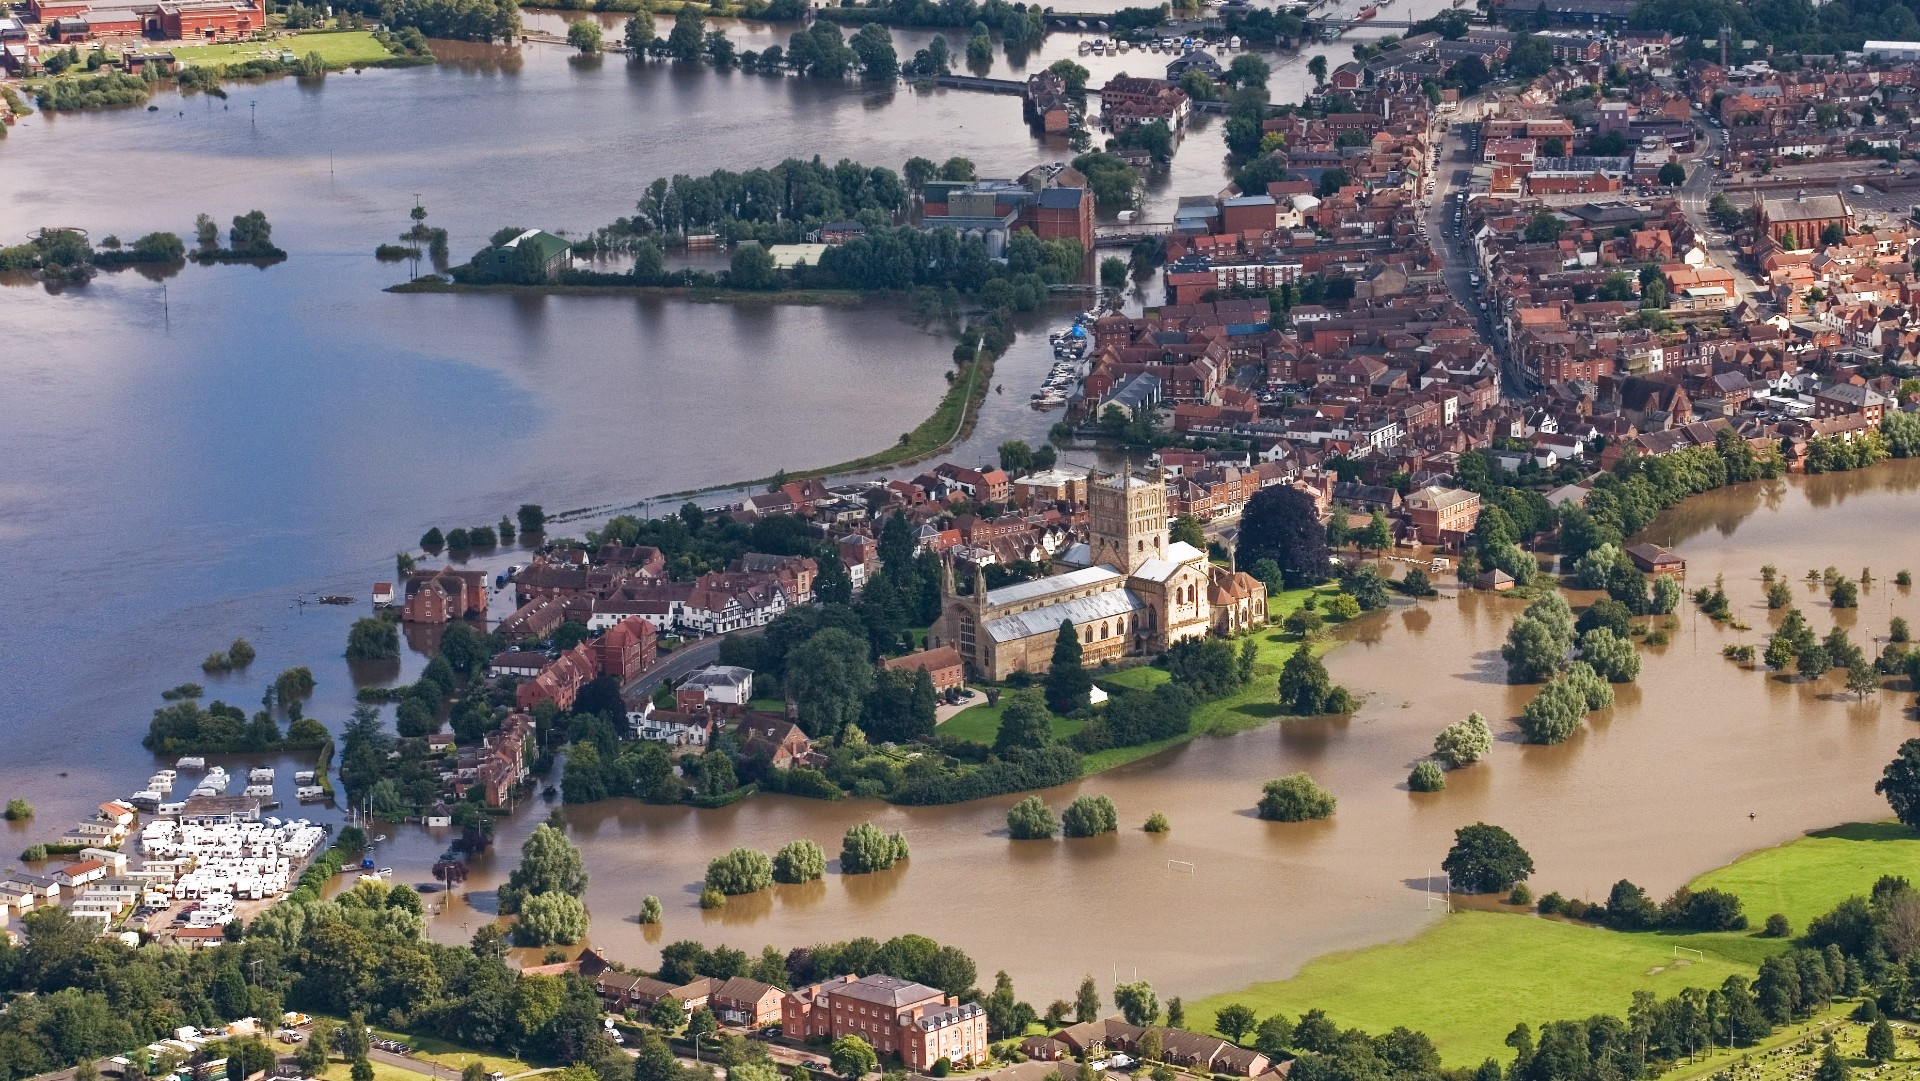 Tewkesbury in Gloucestershire flooded in 2007